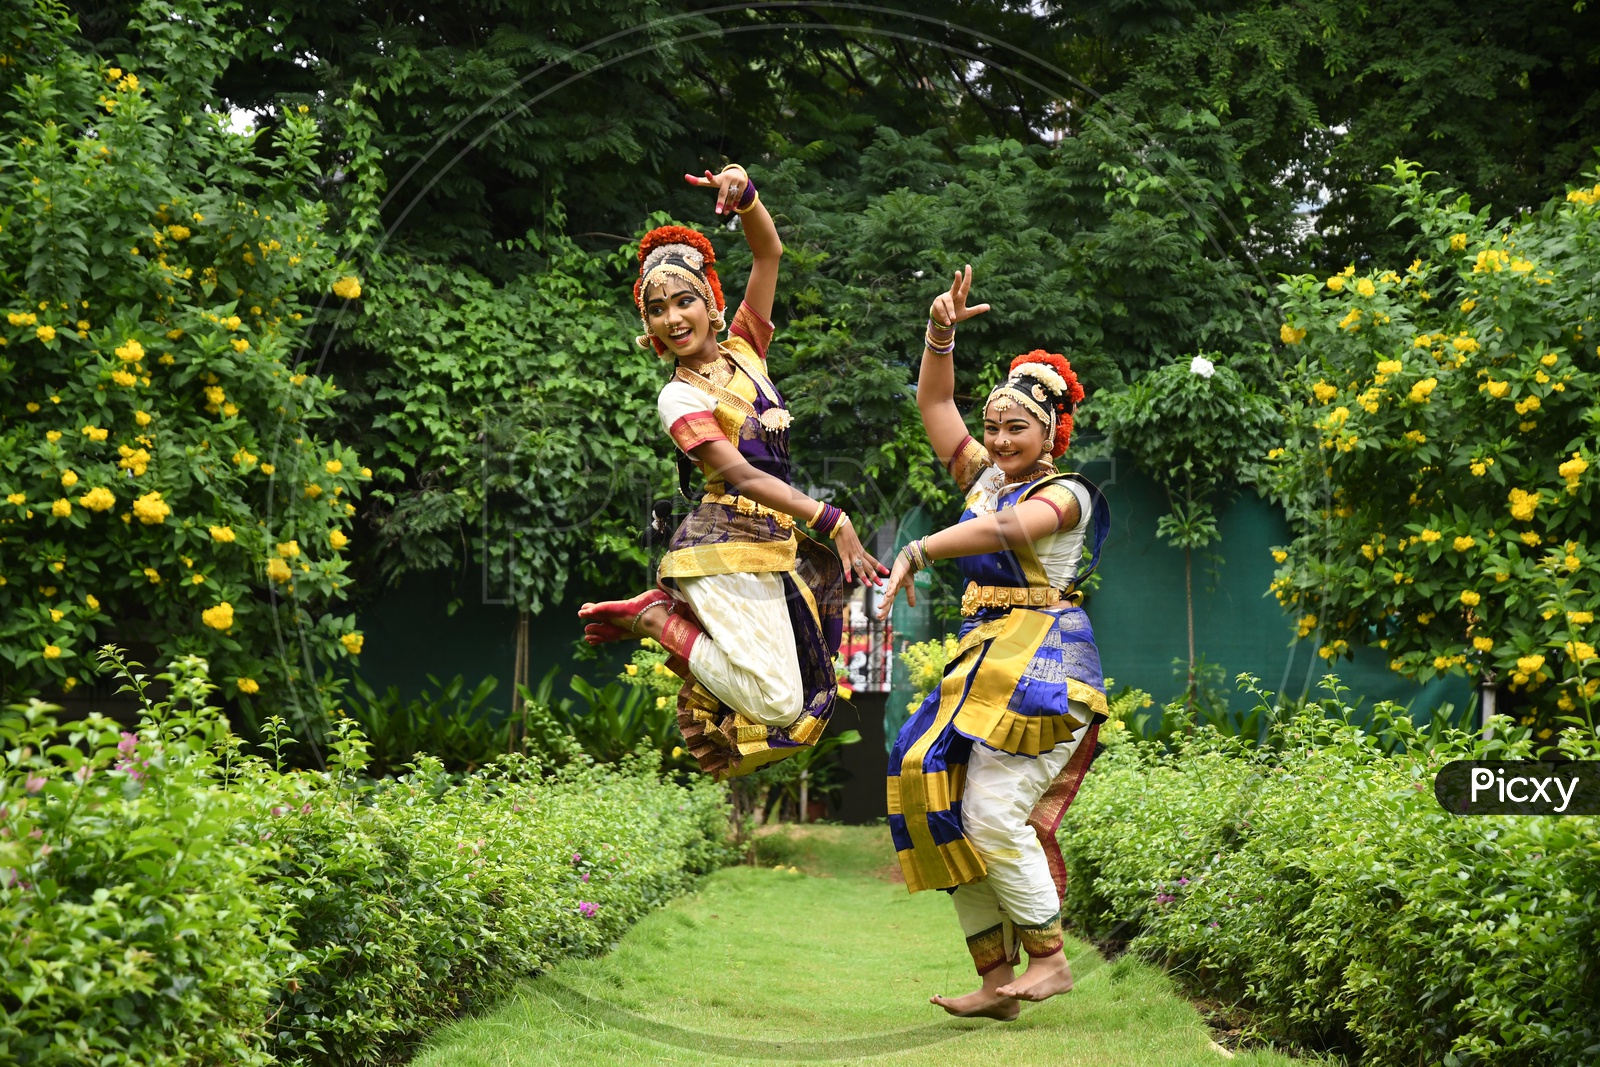 Indian Girls rehearsing Bharatanatyam Dance in the Lawn